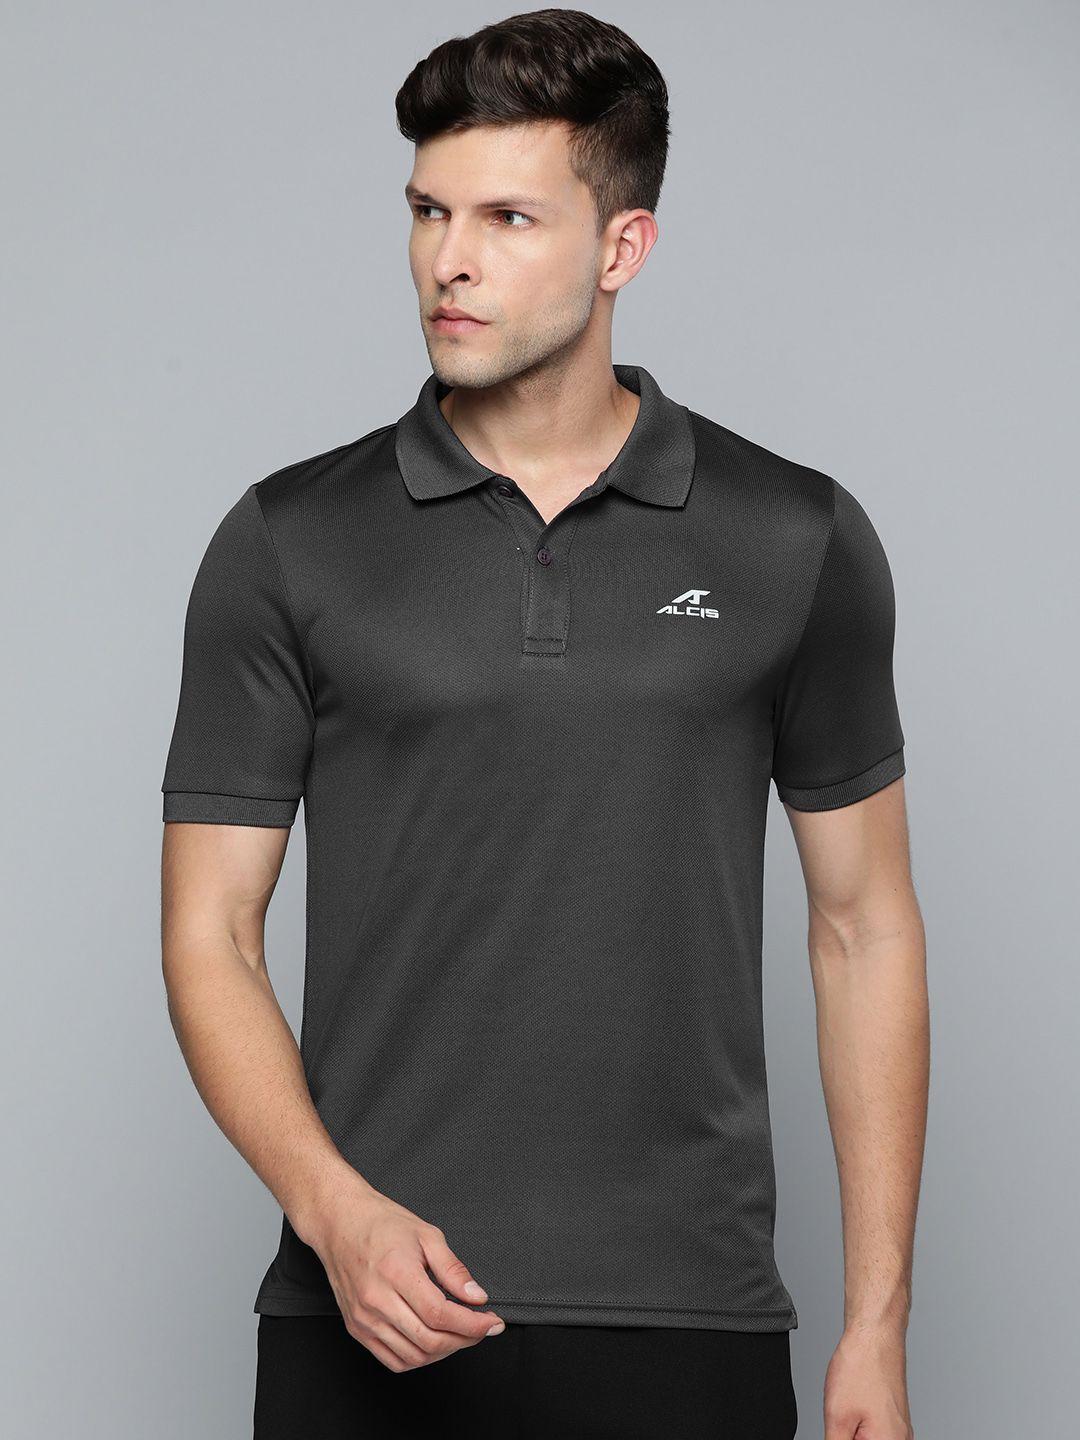 alcis-men-charcoal-grey-polo-collar-slim-fit-t-shirt